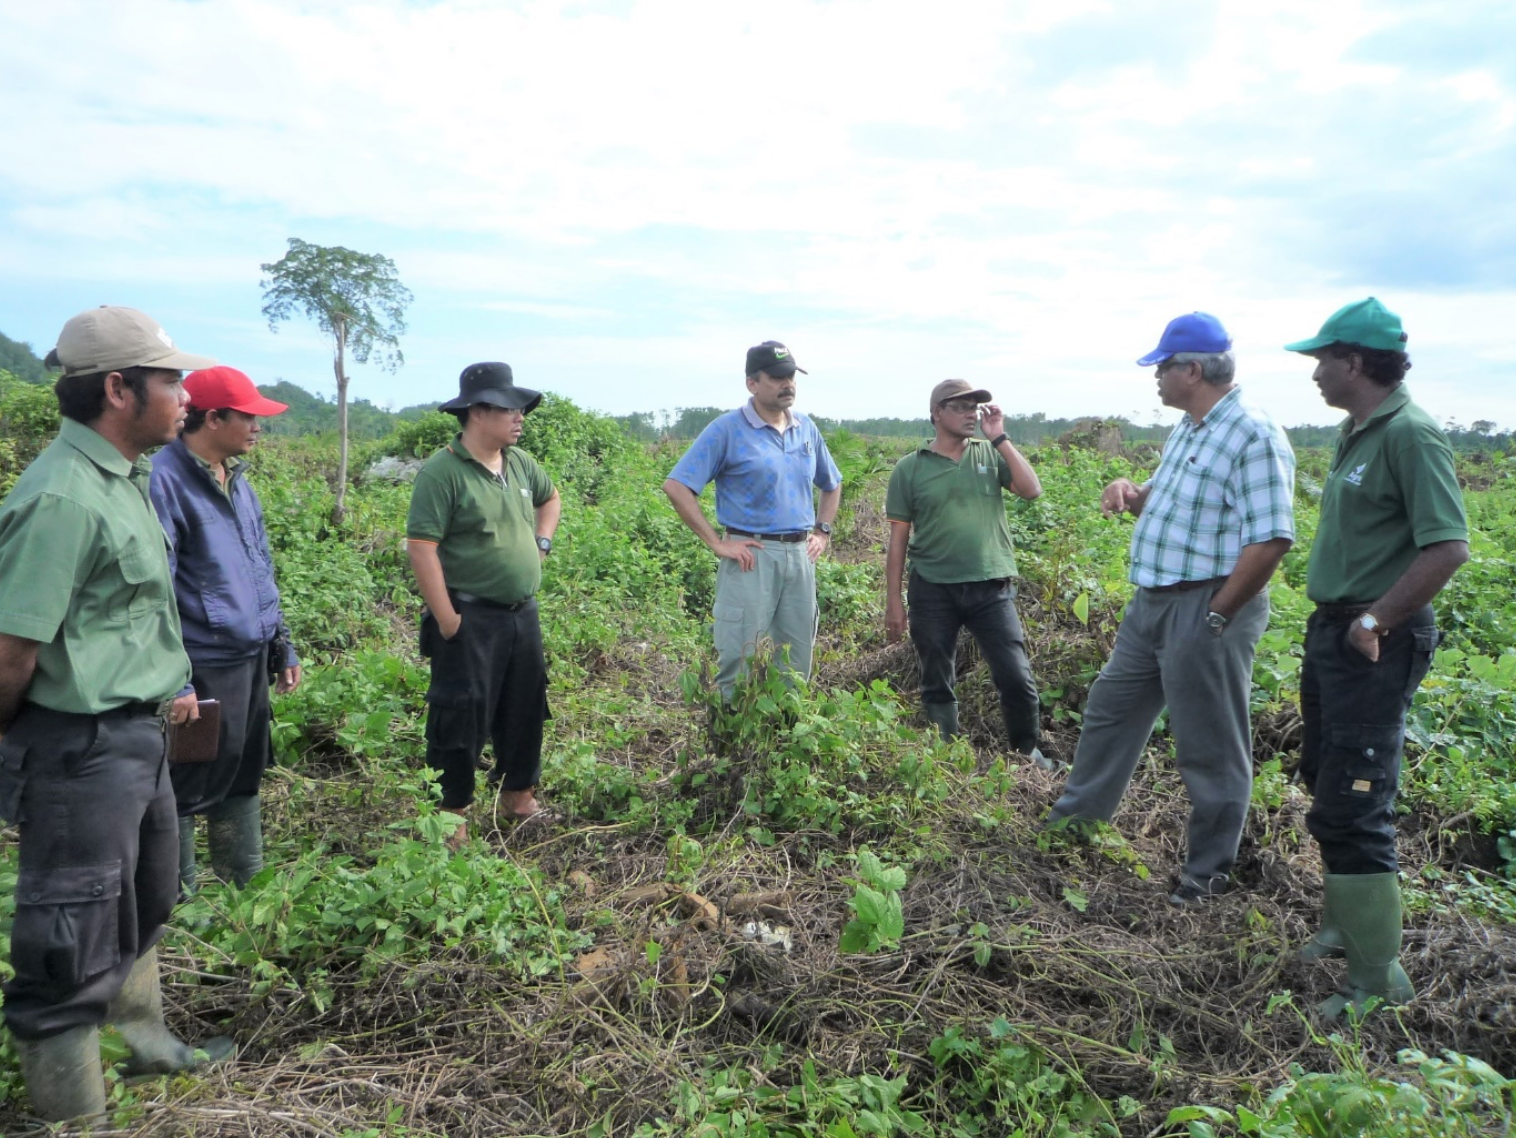   Green Field Development Advisory  – Field discussion pertaining to green field development for oil palm cultivation. 